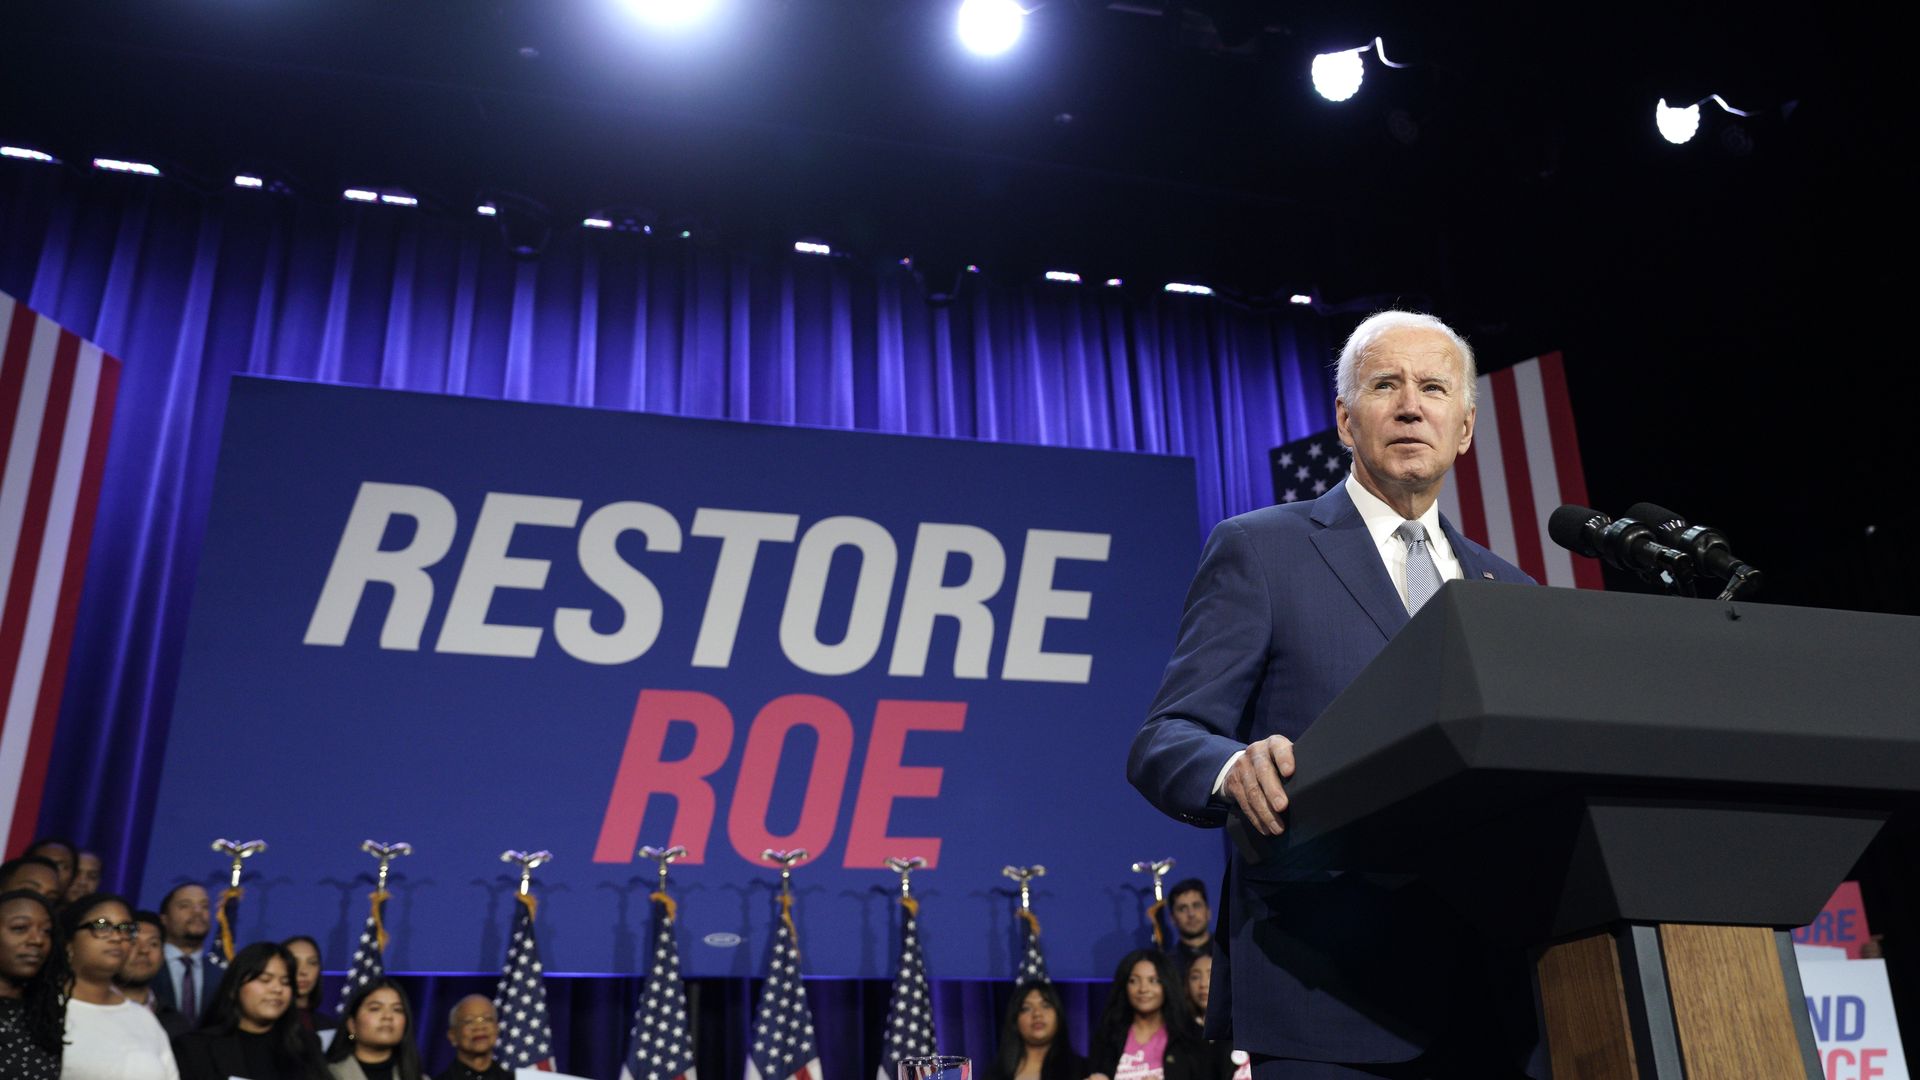 Joe Biden standing in front of a backdrop that says "Restore Roe"